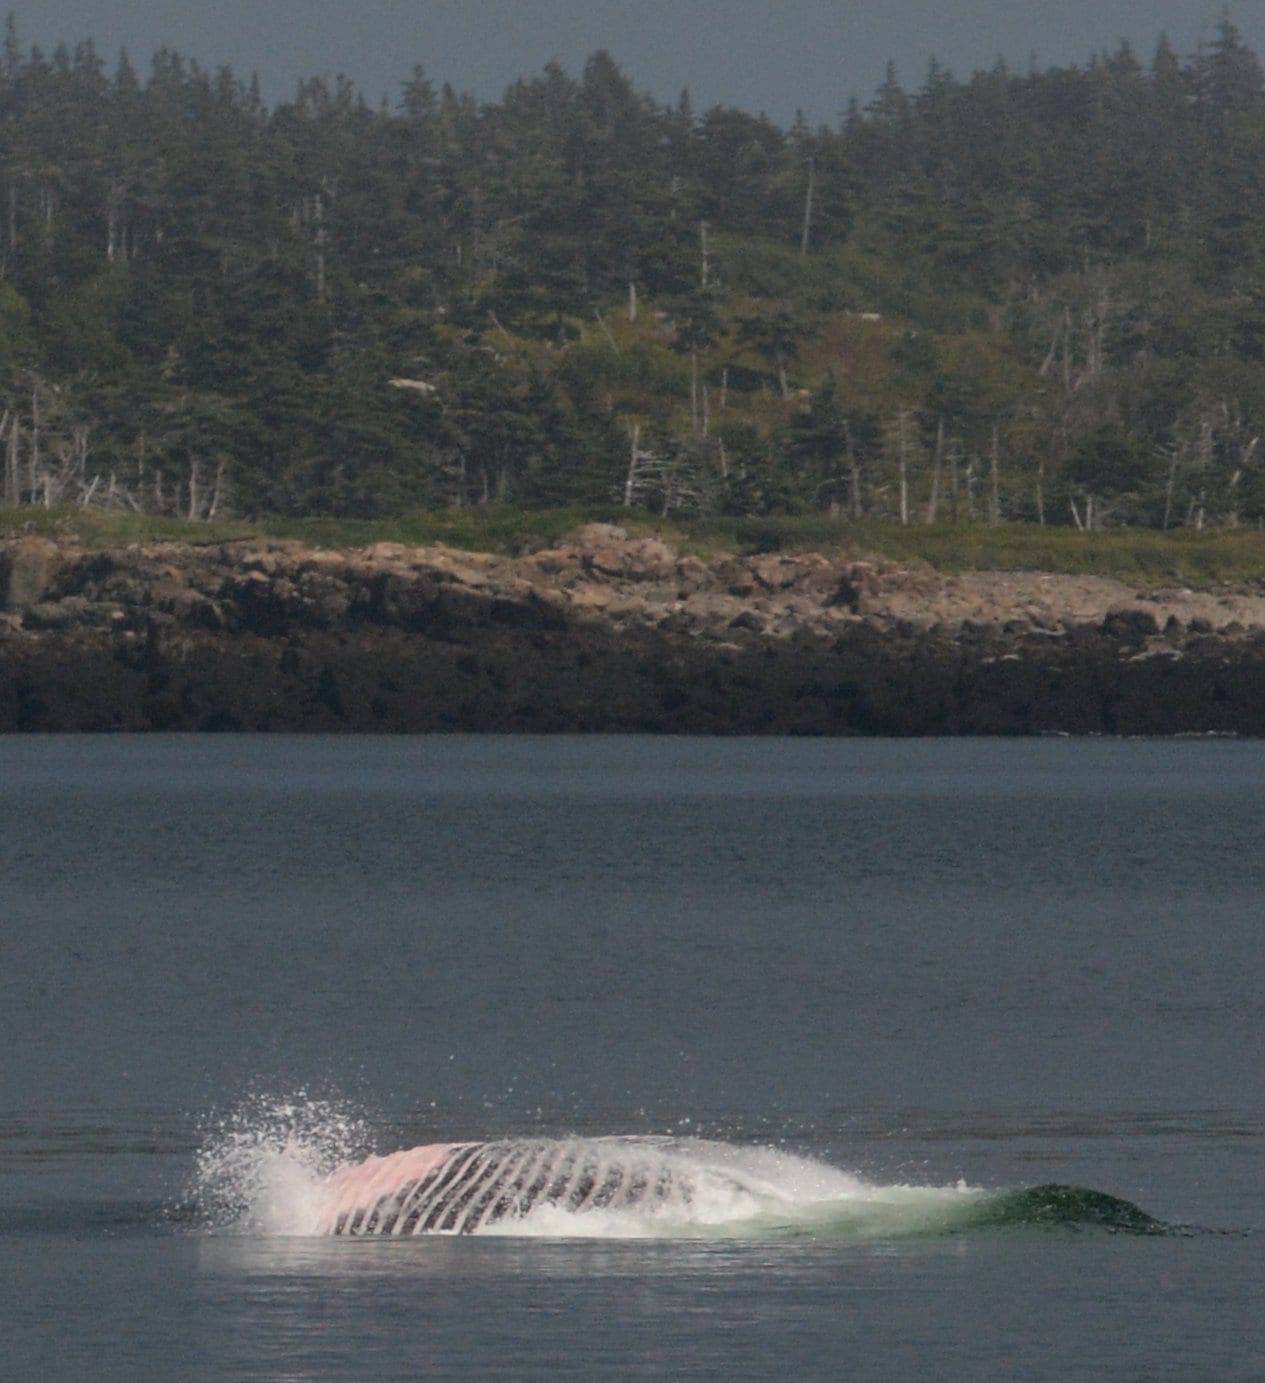 Fin whale lunge feeding upside down